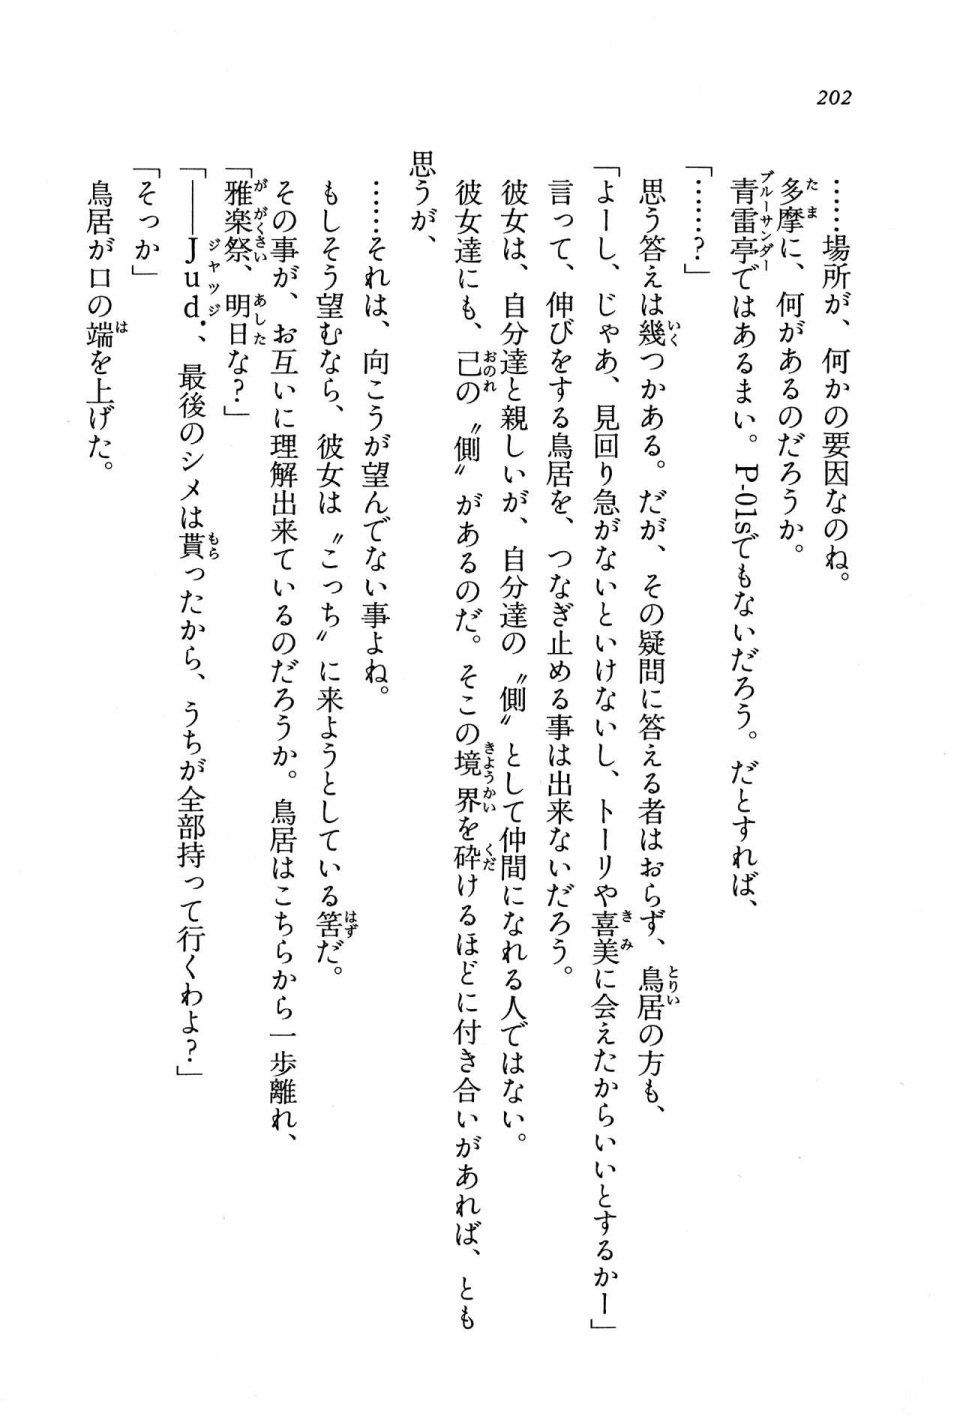 Kyoukai Senjou no Horizon BD Special Mininovel Vol 8(4B) - Photo #206